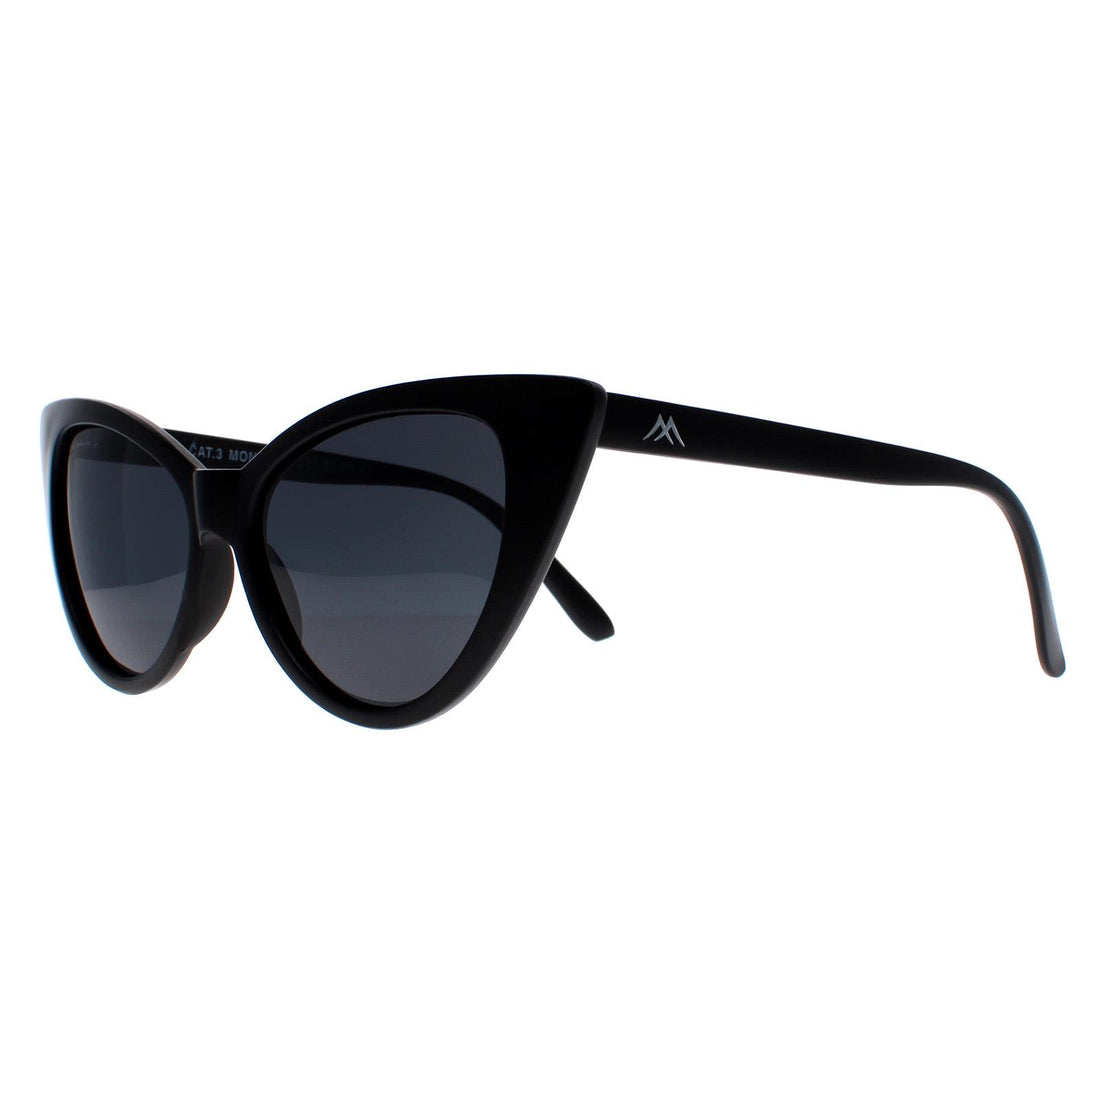 Montana Sunglasses MP71 Matte Black Grey Polarized